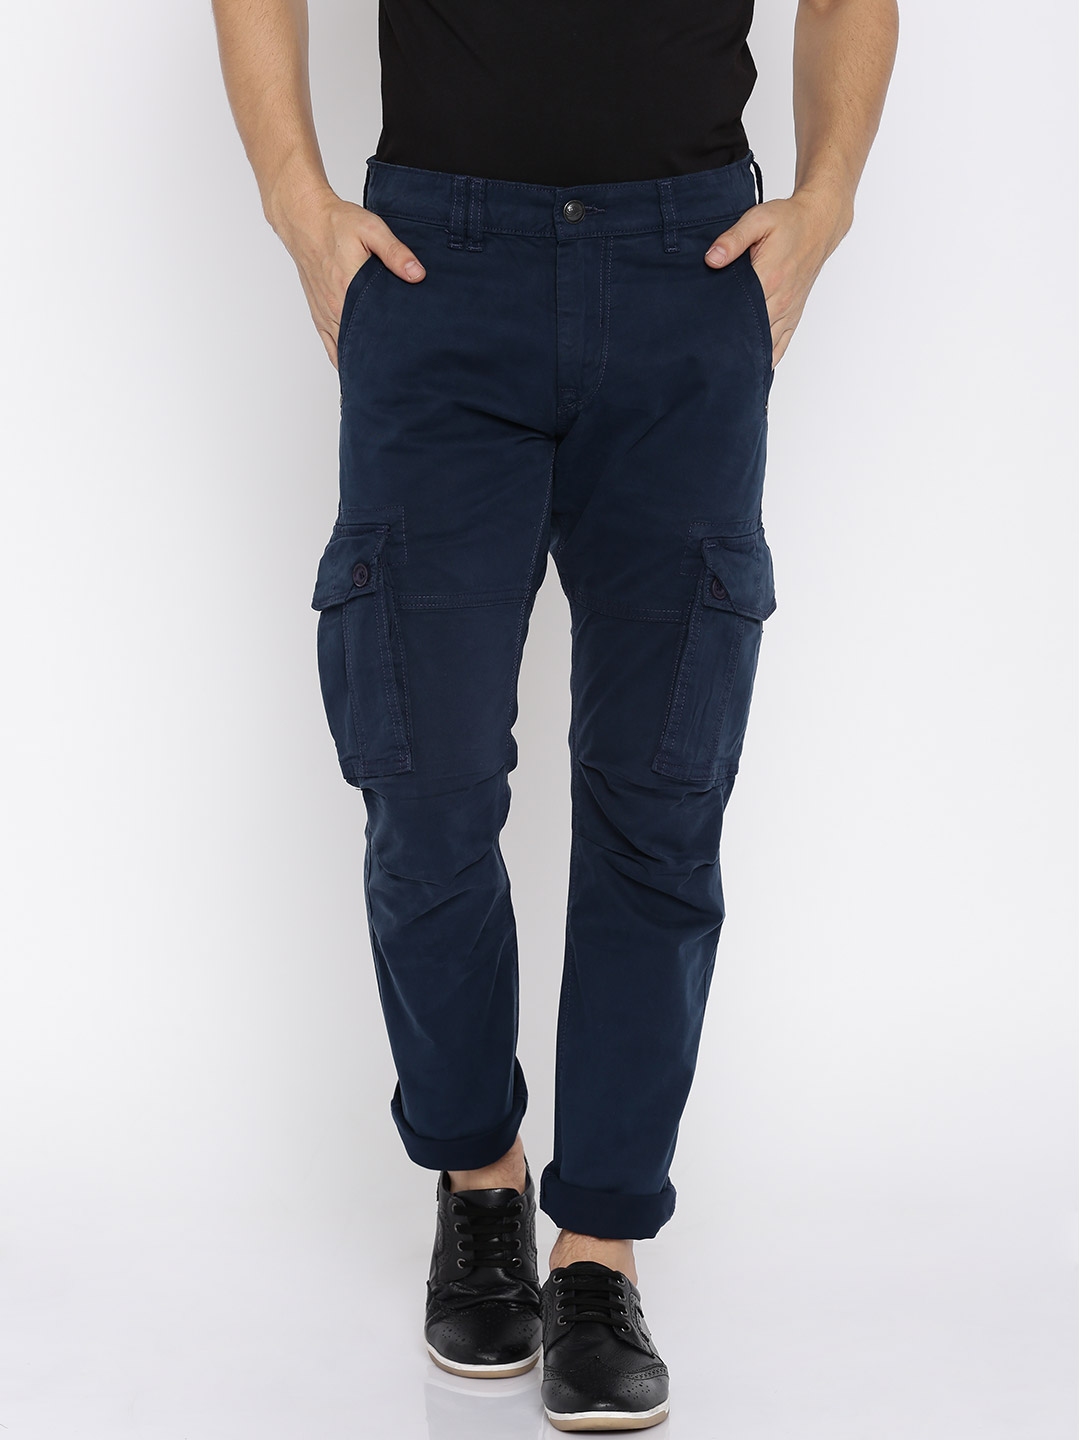 Buy Navy Blue Trousers  Pants for Men by Buda Jeans Co Online  Ajiocom